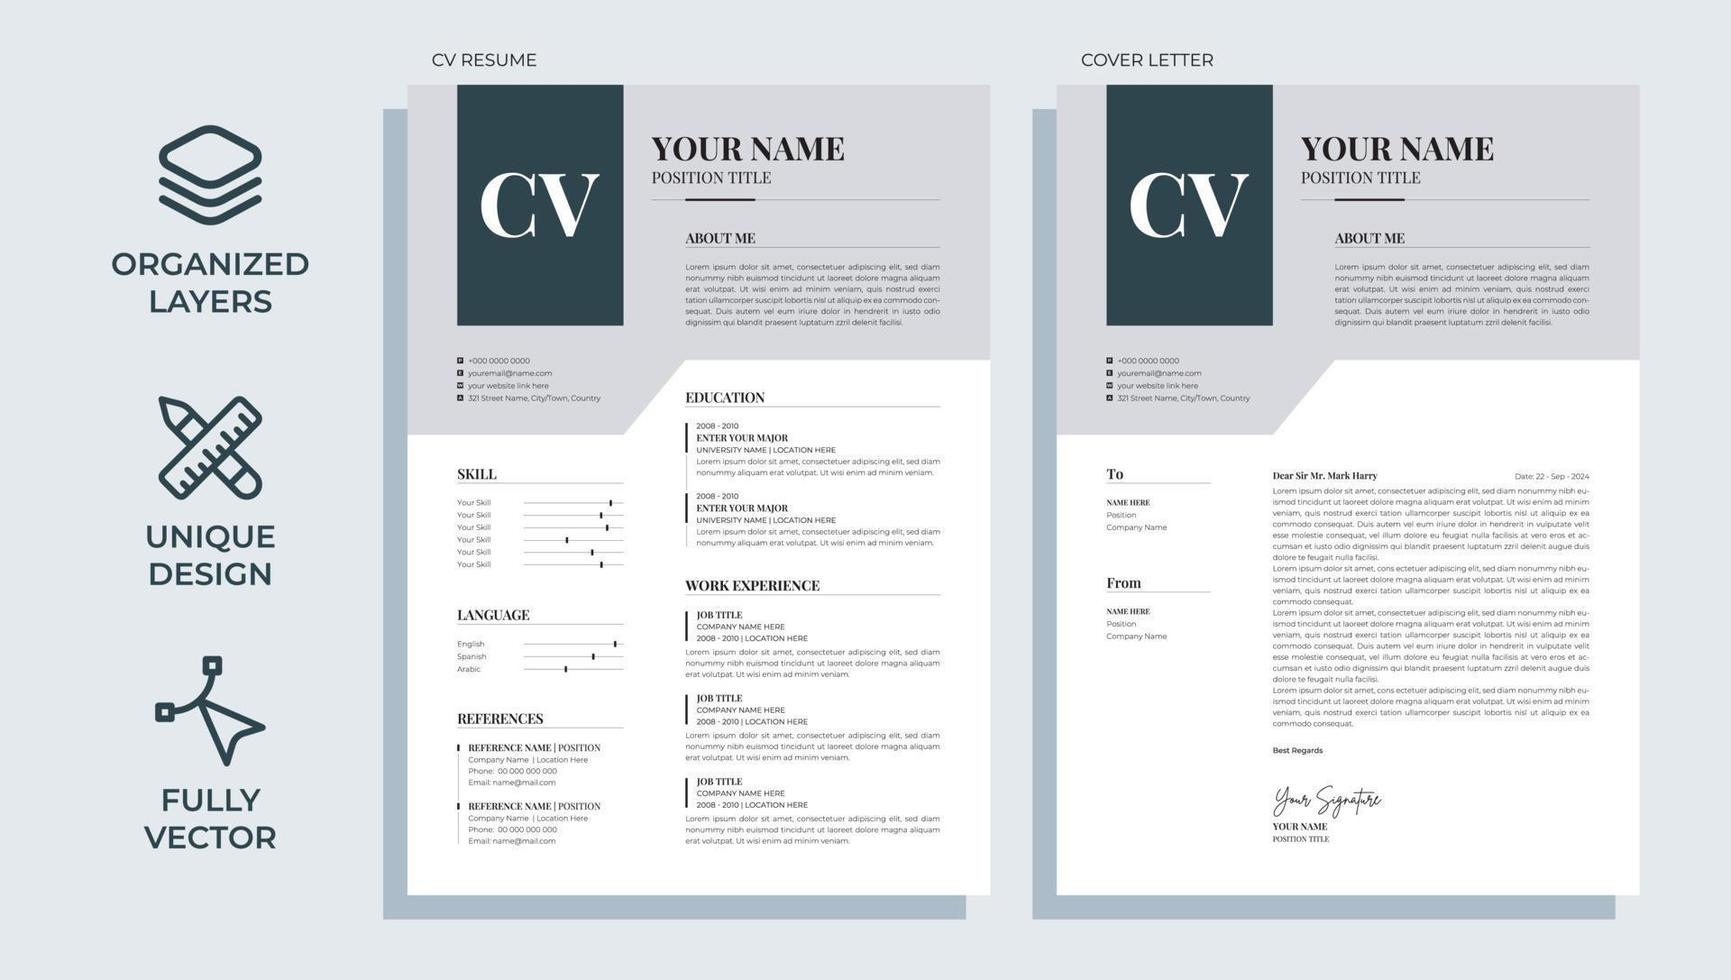 Professional and unique CV resume template design with letterhead cover letter - vector minimalist - black, white and gray color combination